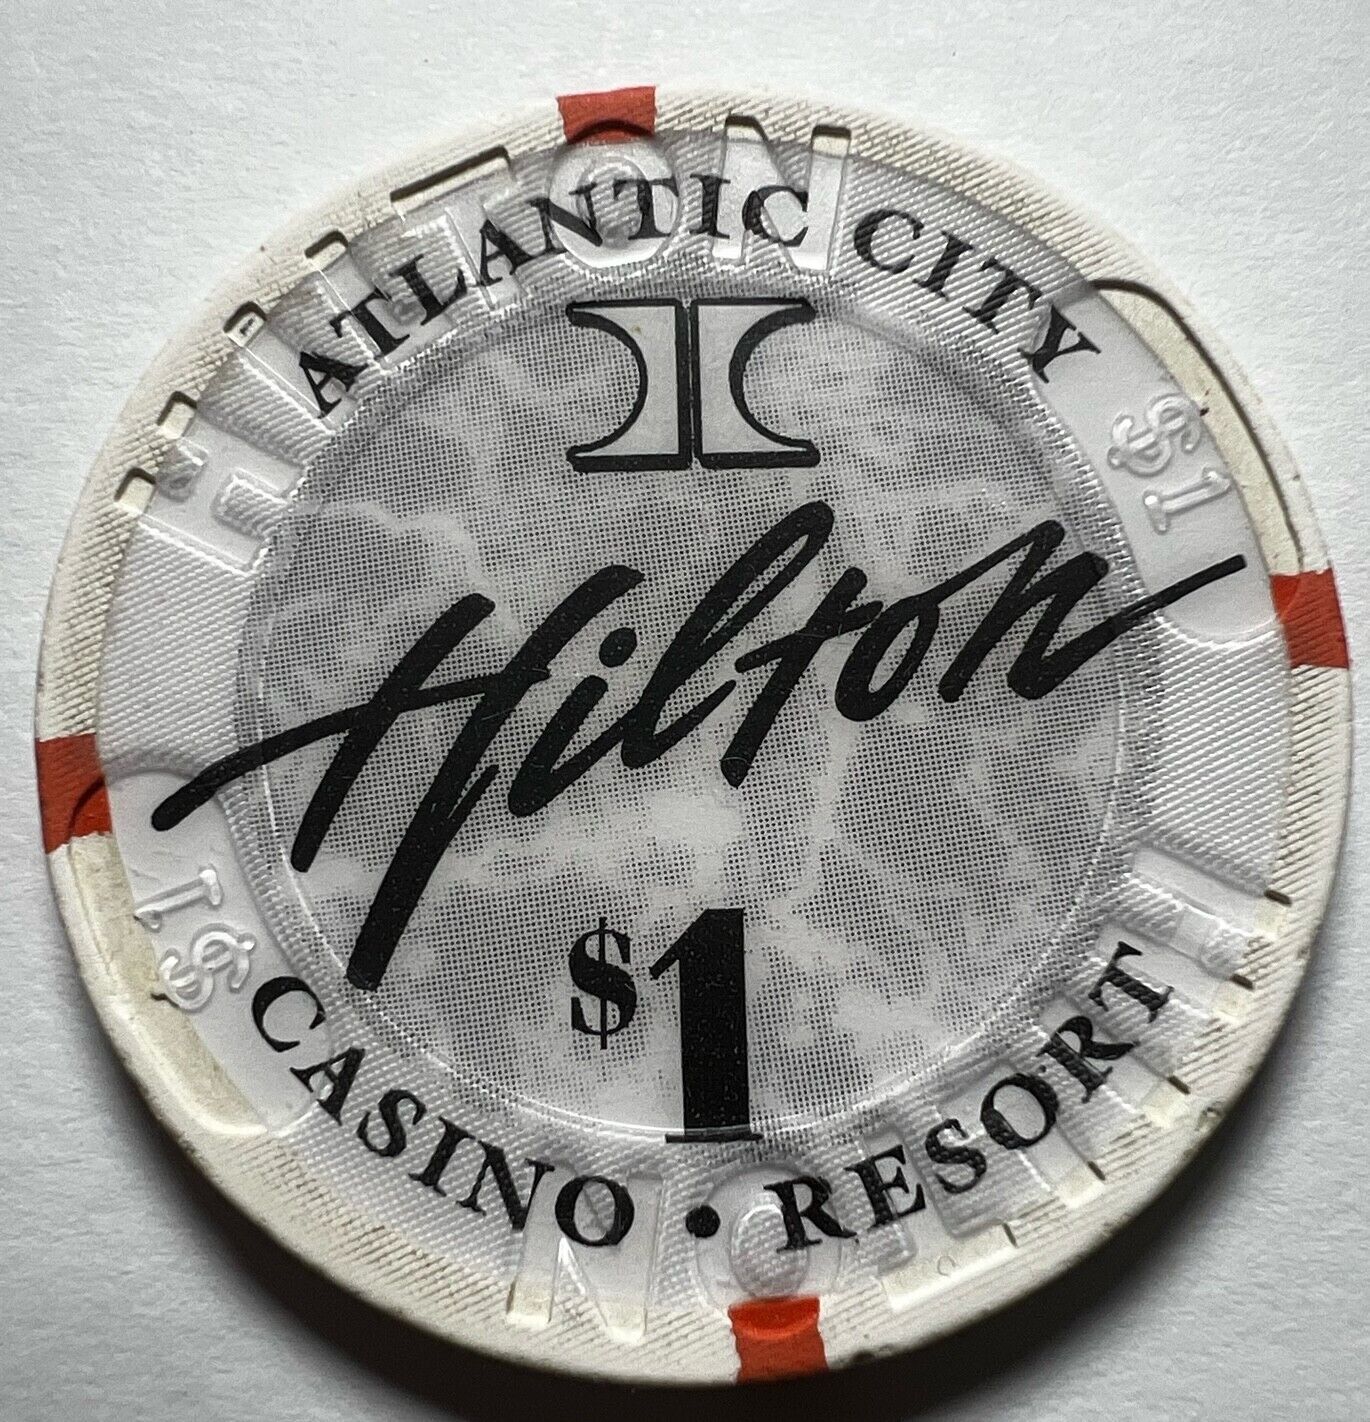 Atlantic City Hilton $1 Casino Chip, casino closed in 2012